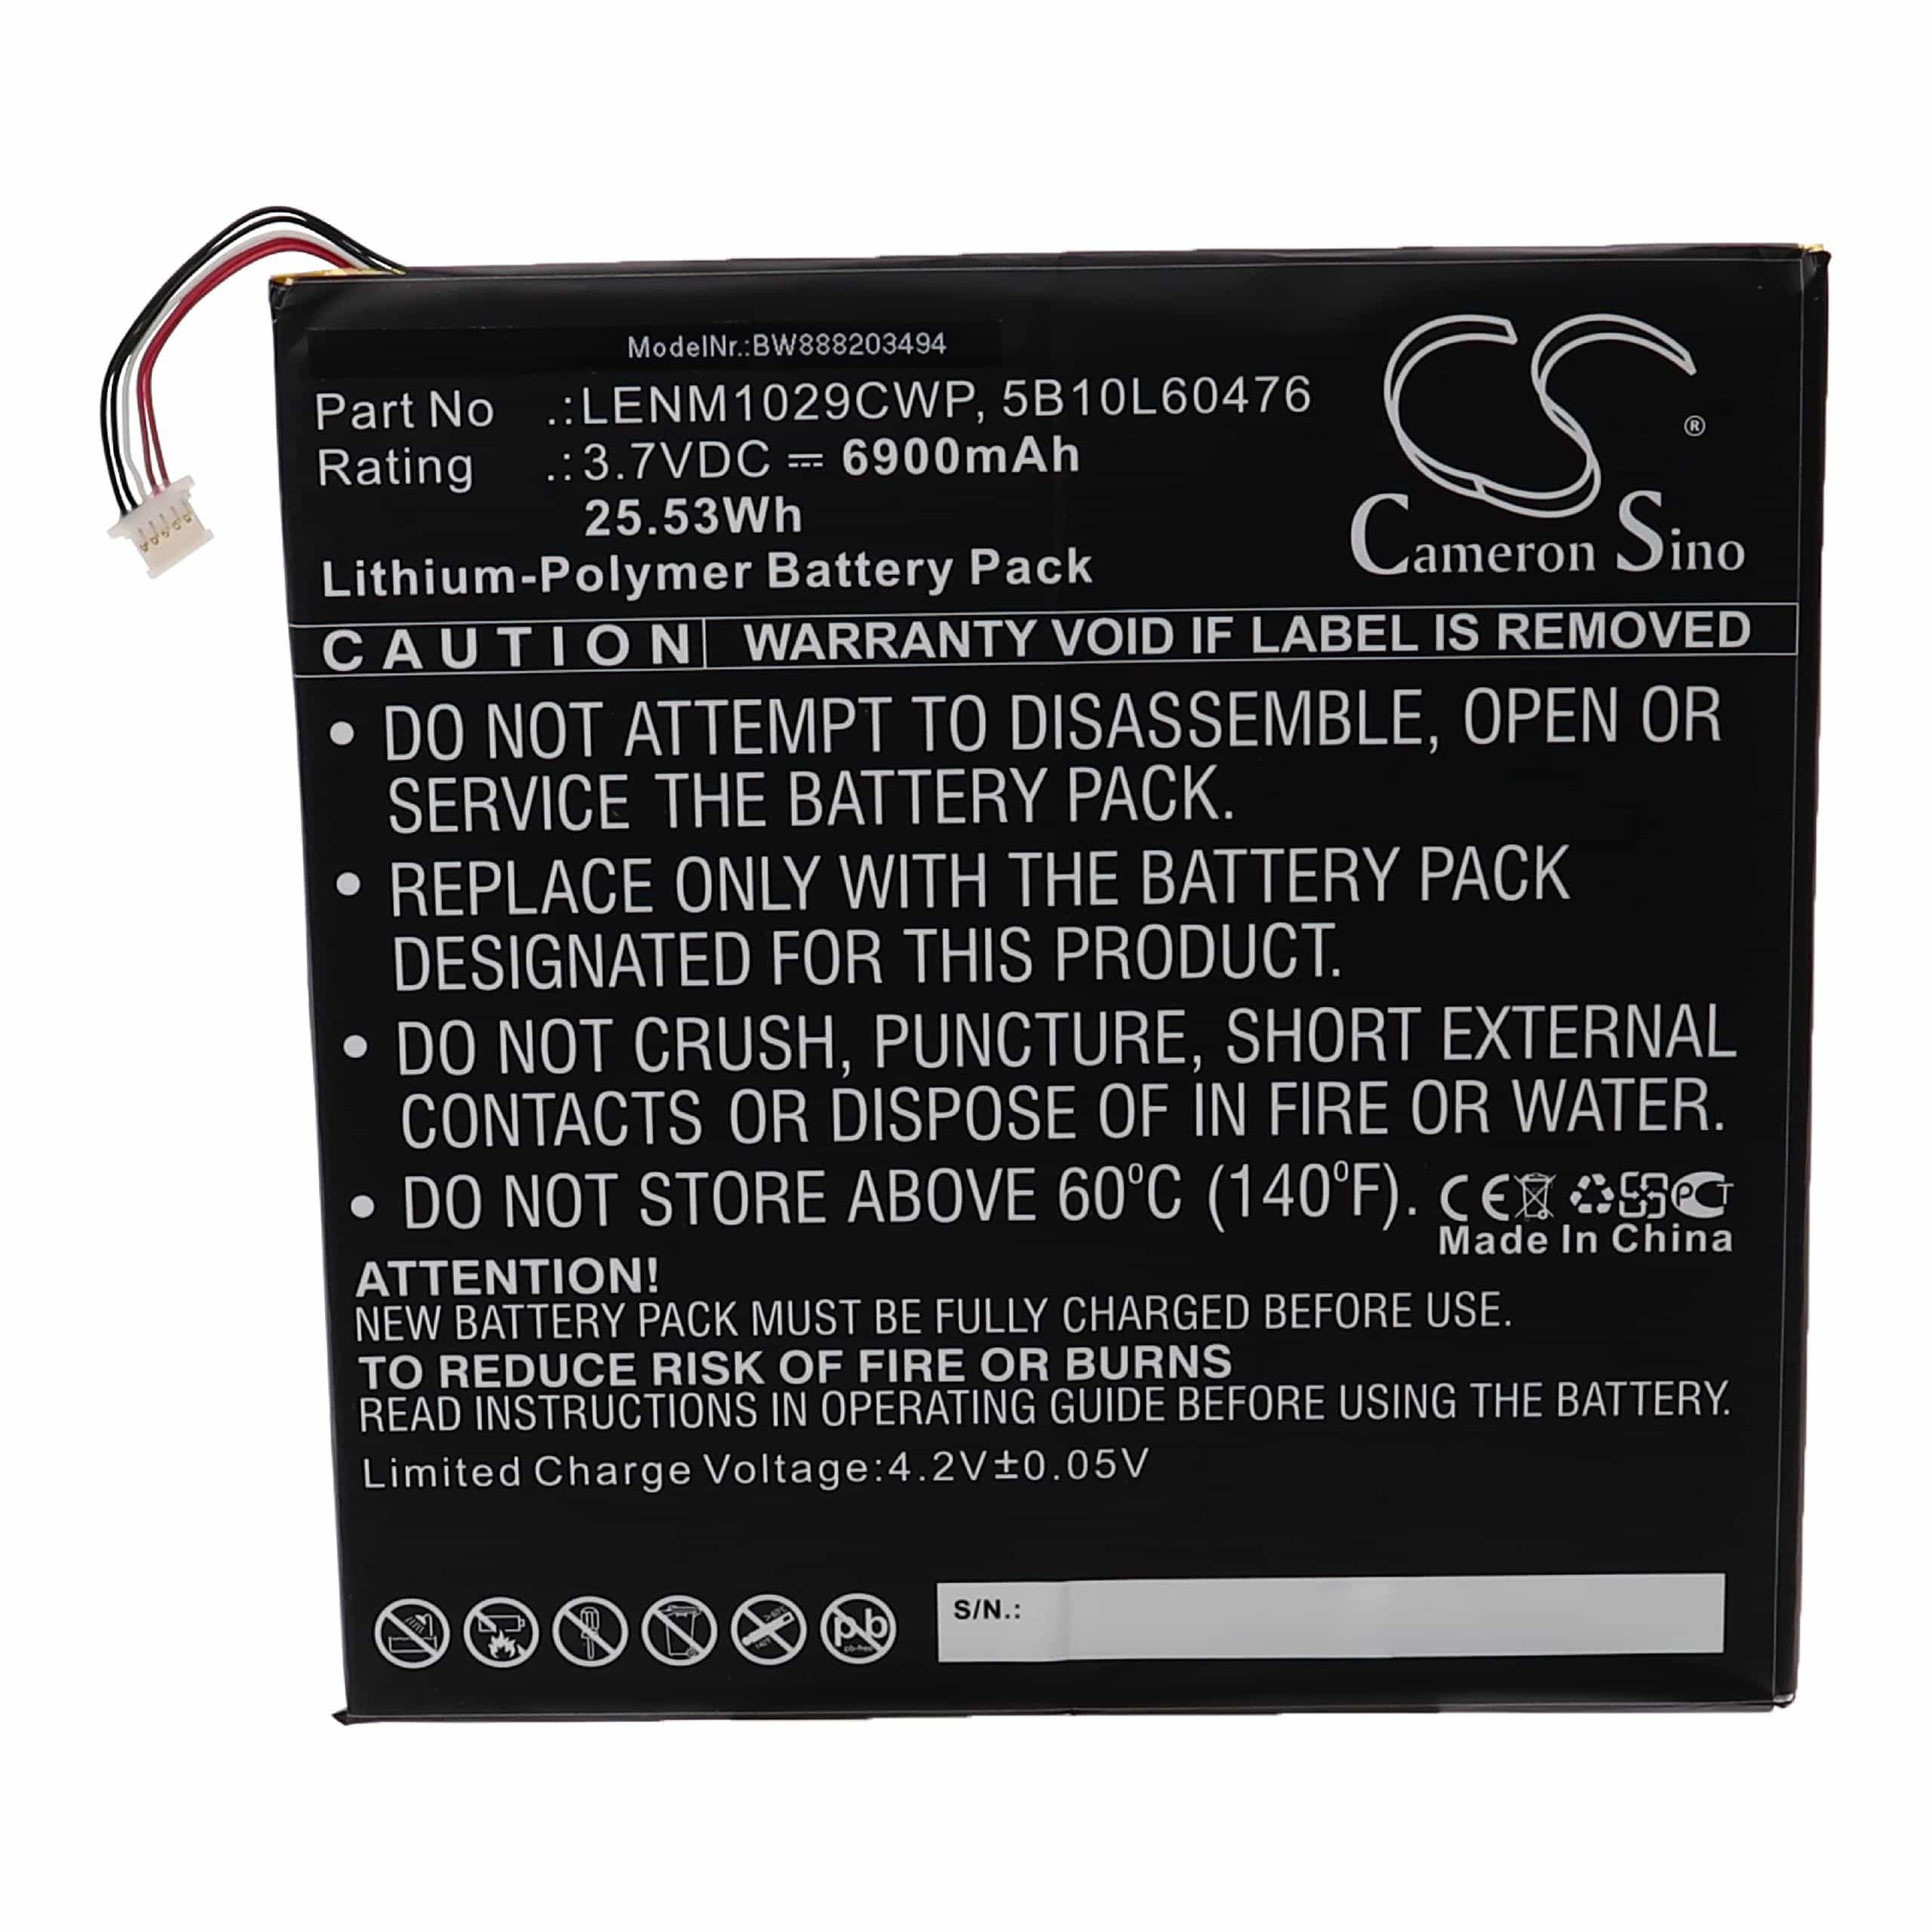 Akumulator do laptopa zamiennik Lenovo 5B10L13923, 5B10L60476, Tablet01, LENM1029CWP - 6900 mAh 3,7 V LiPo